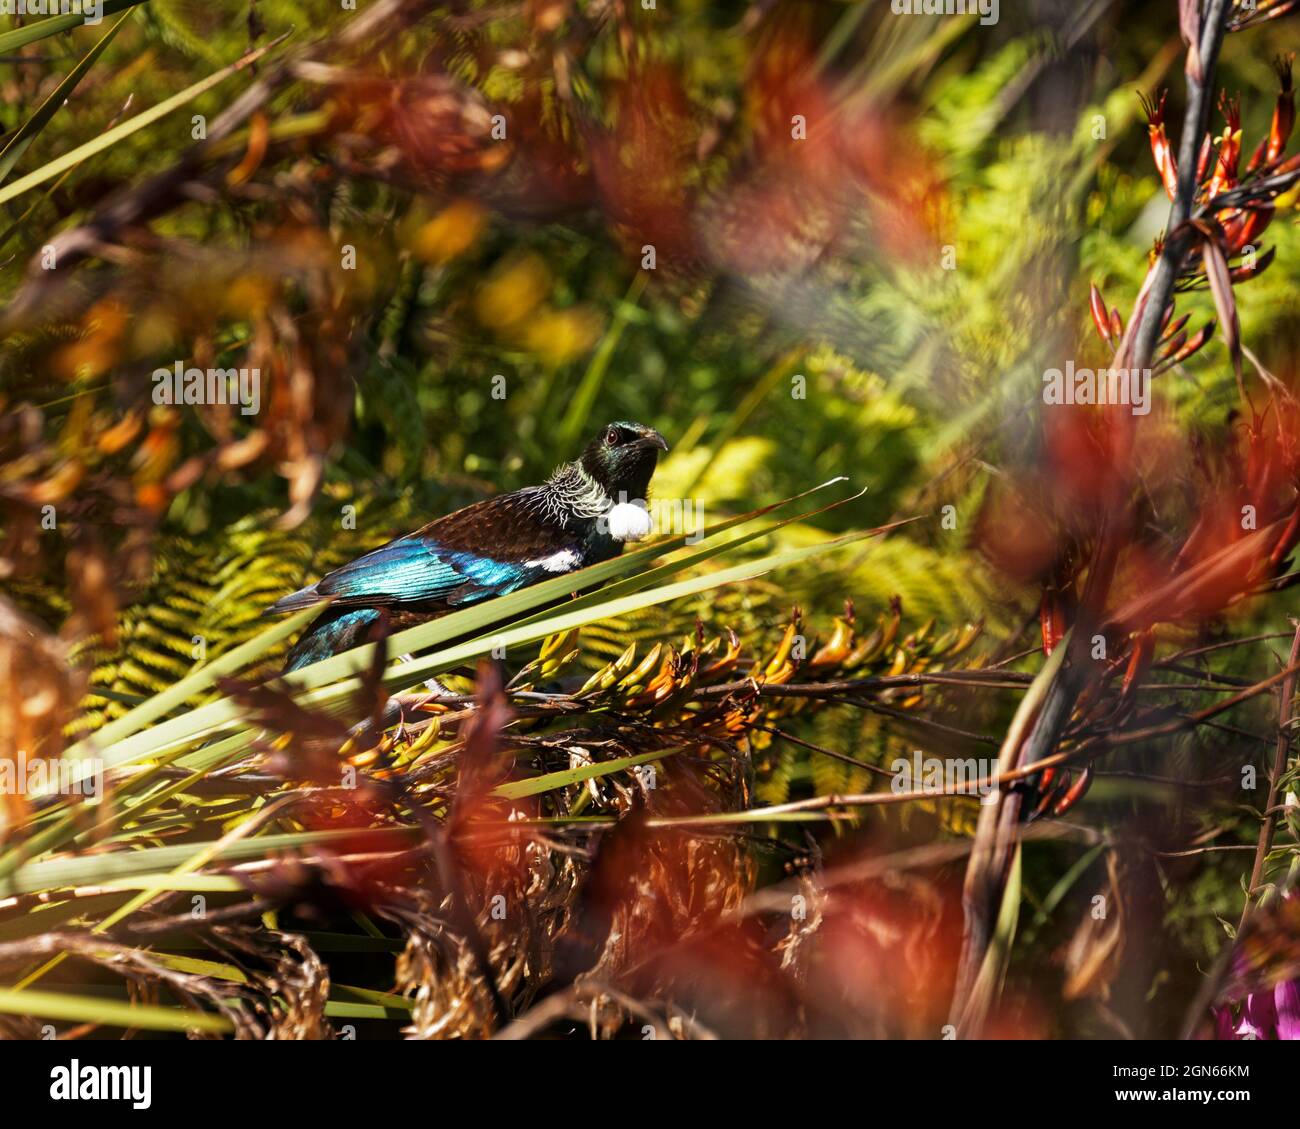 Tui, endemic passerine bird of New Zealand, on a flax plant looking toward camera Stock Photo